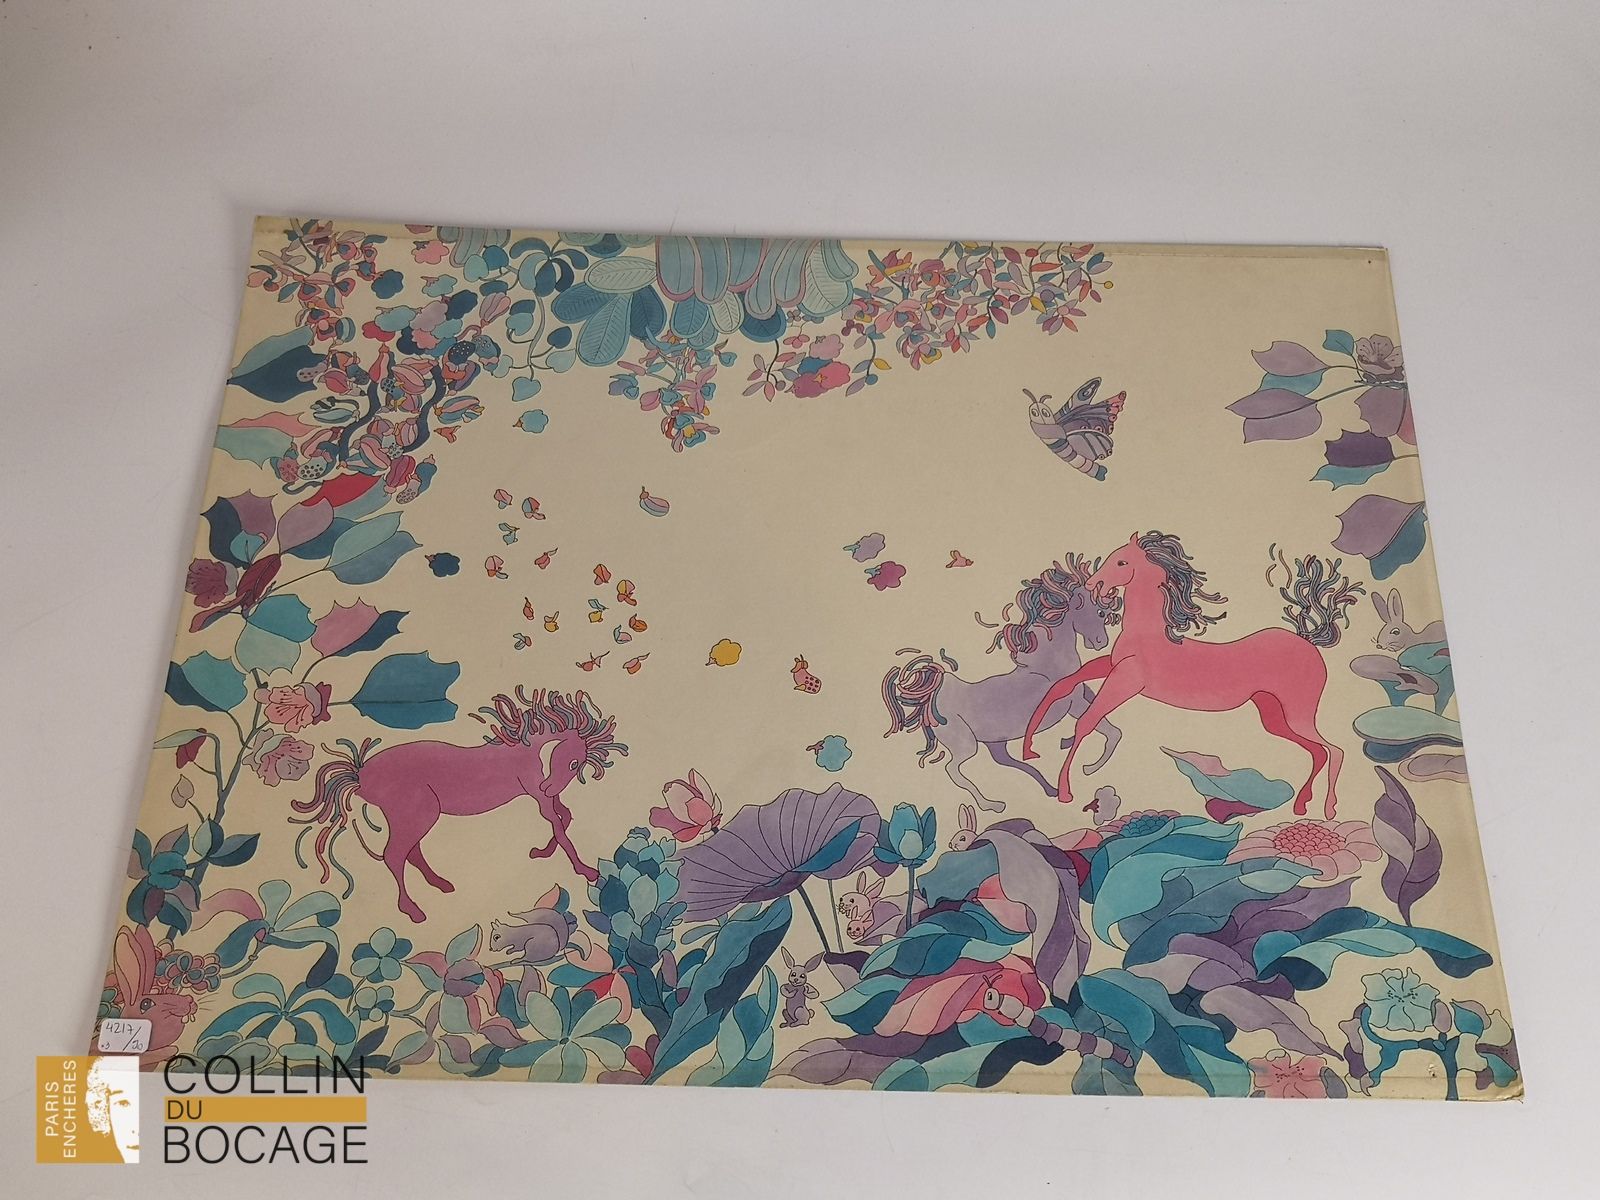 Null 插图
埃莱娜-布罗歇（1948-2023） 

蚱蜢家开派对 
诗歌插图，水墨和水彩，纸本
50 x 65 厘米 

兔子的飞行
纸上水墨、铅笔和水彩&hellip;